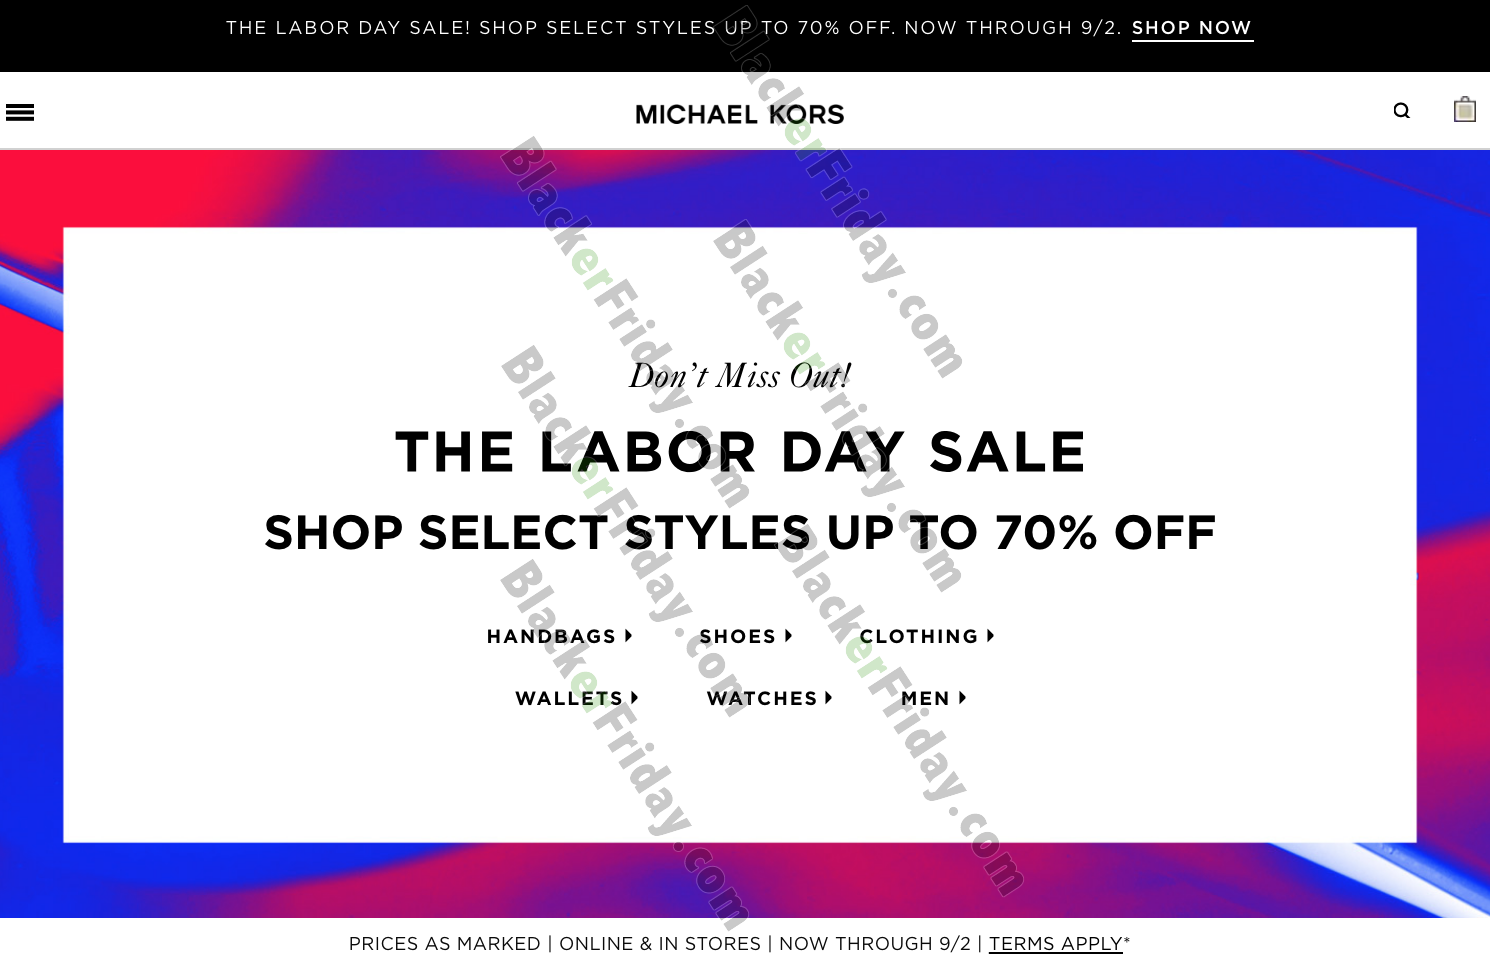 michael kors labor day sale